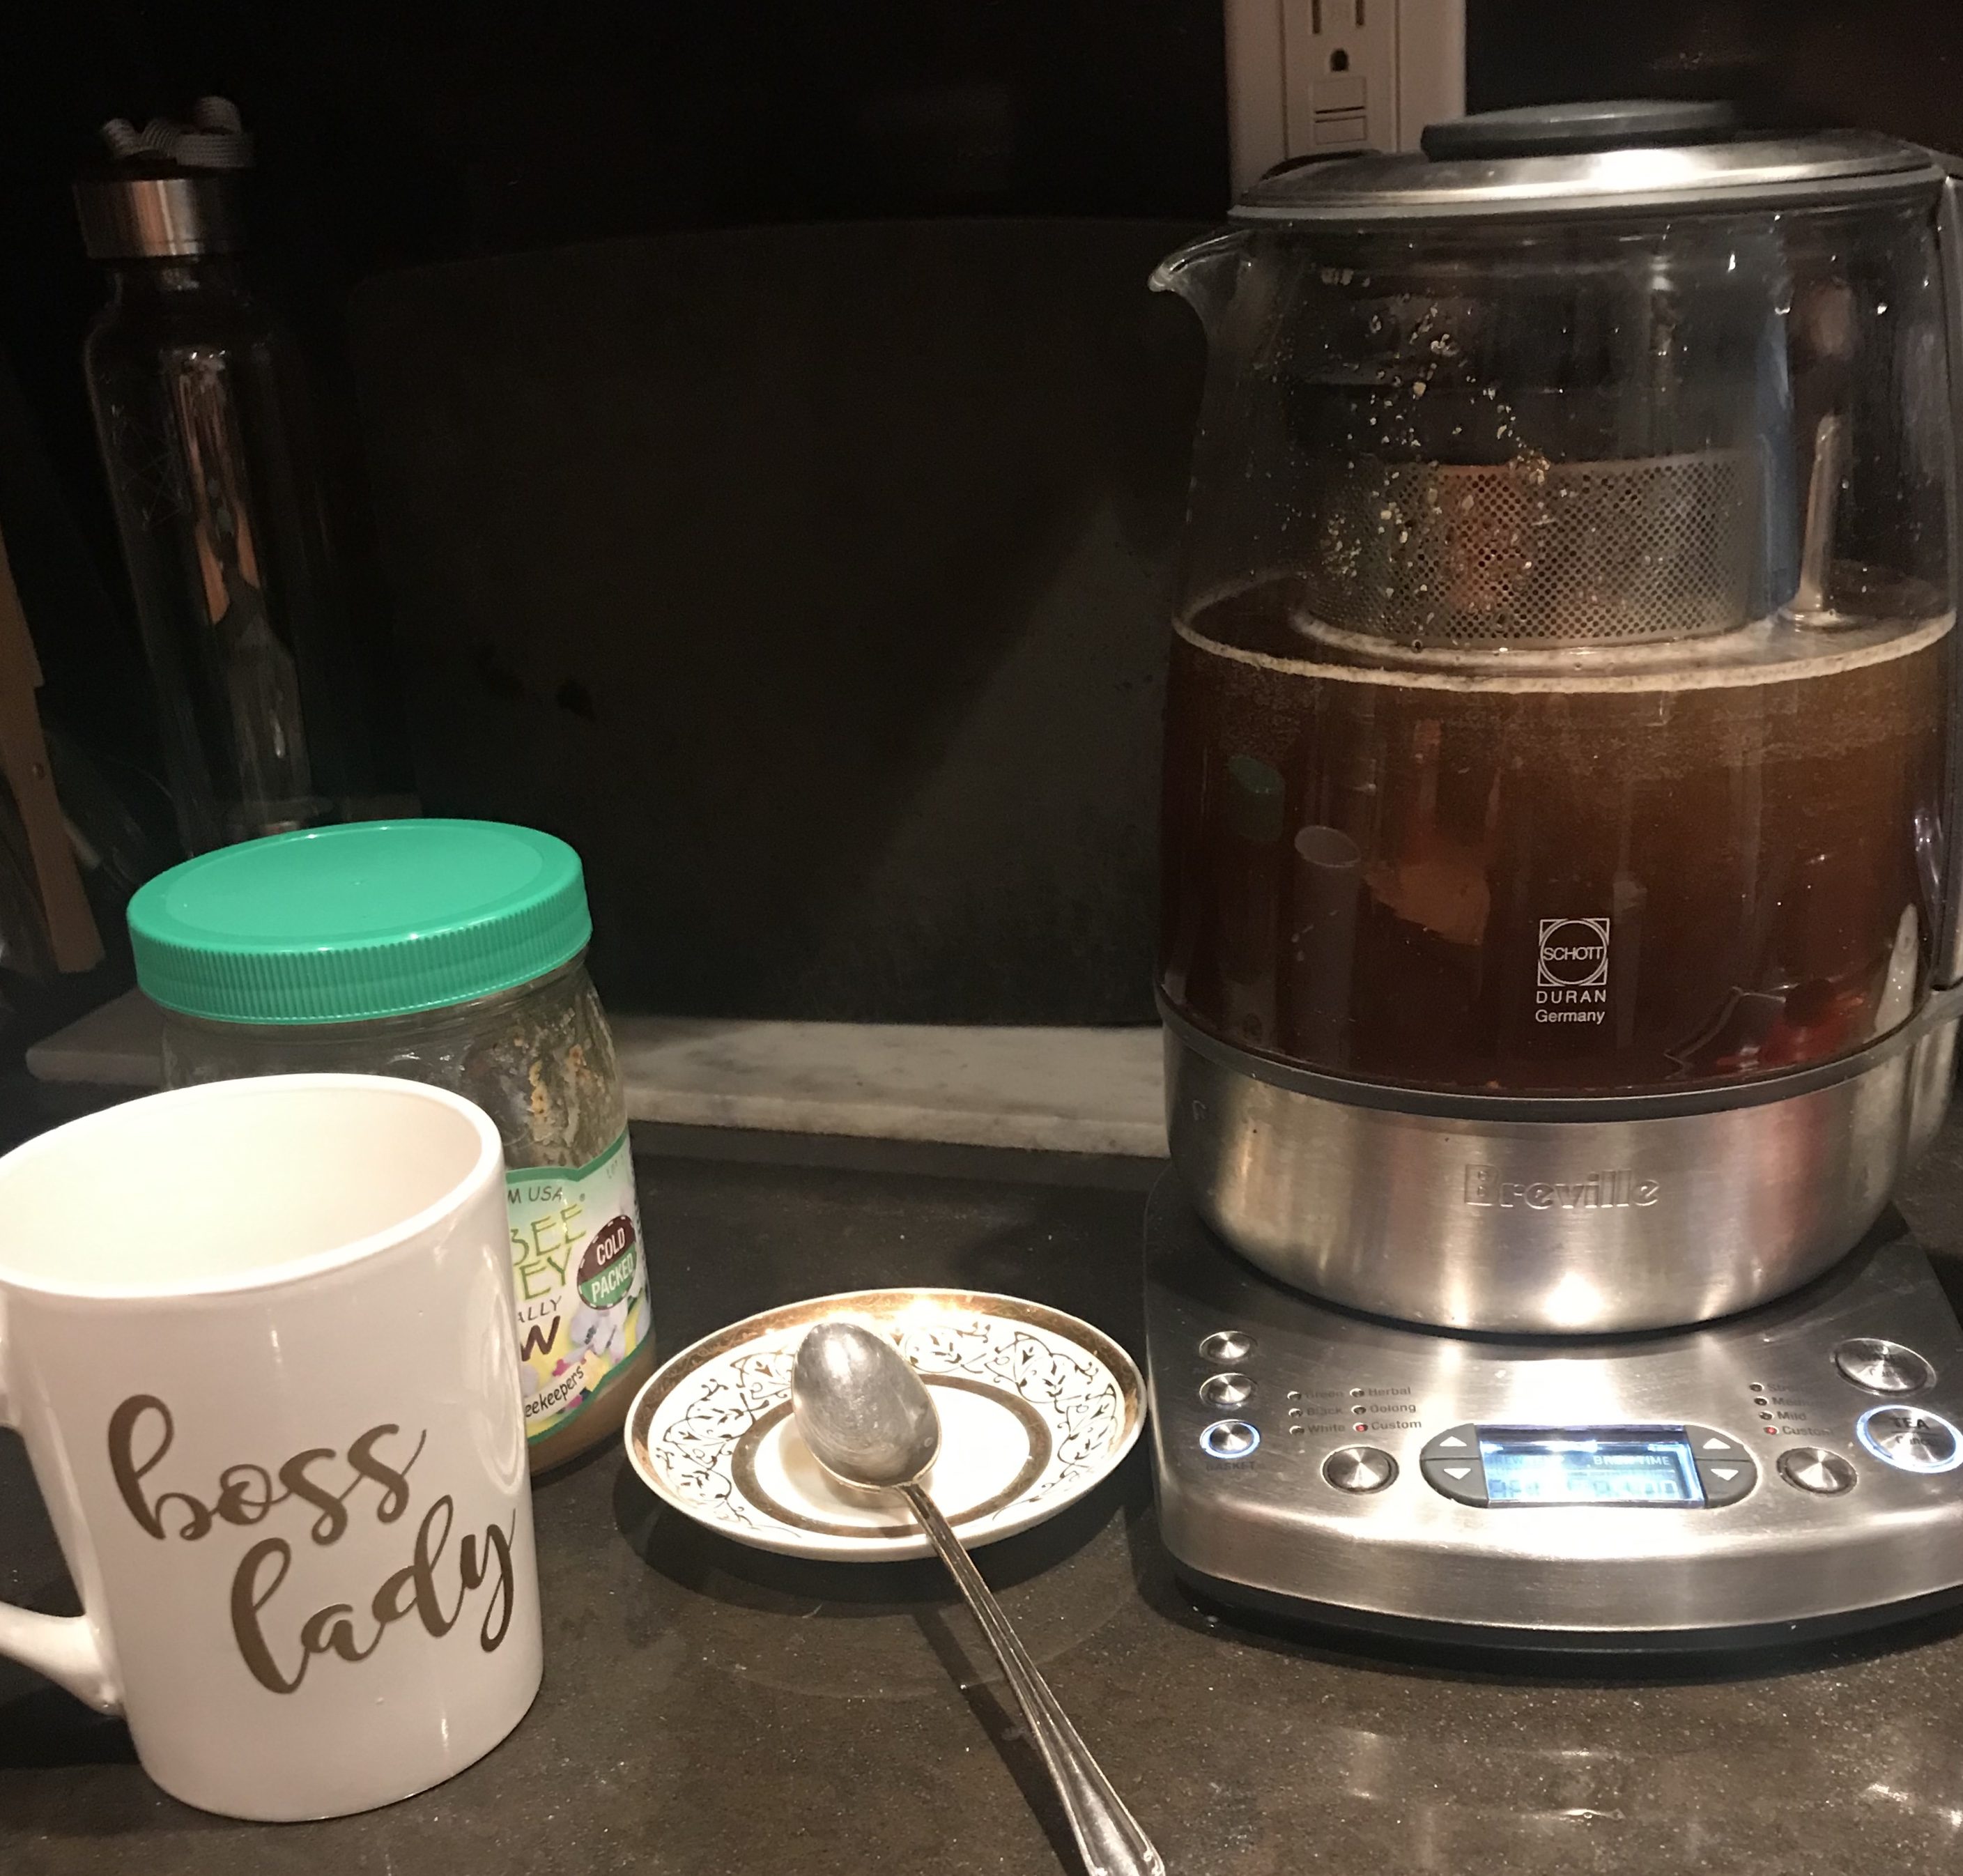 Breville Tea Maker Miami Moms Blog Contributor Adita Lang